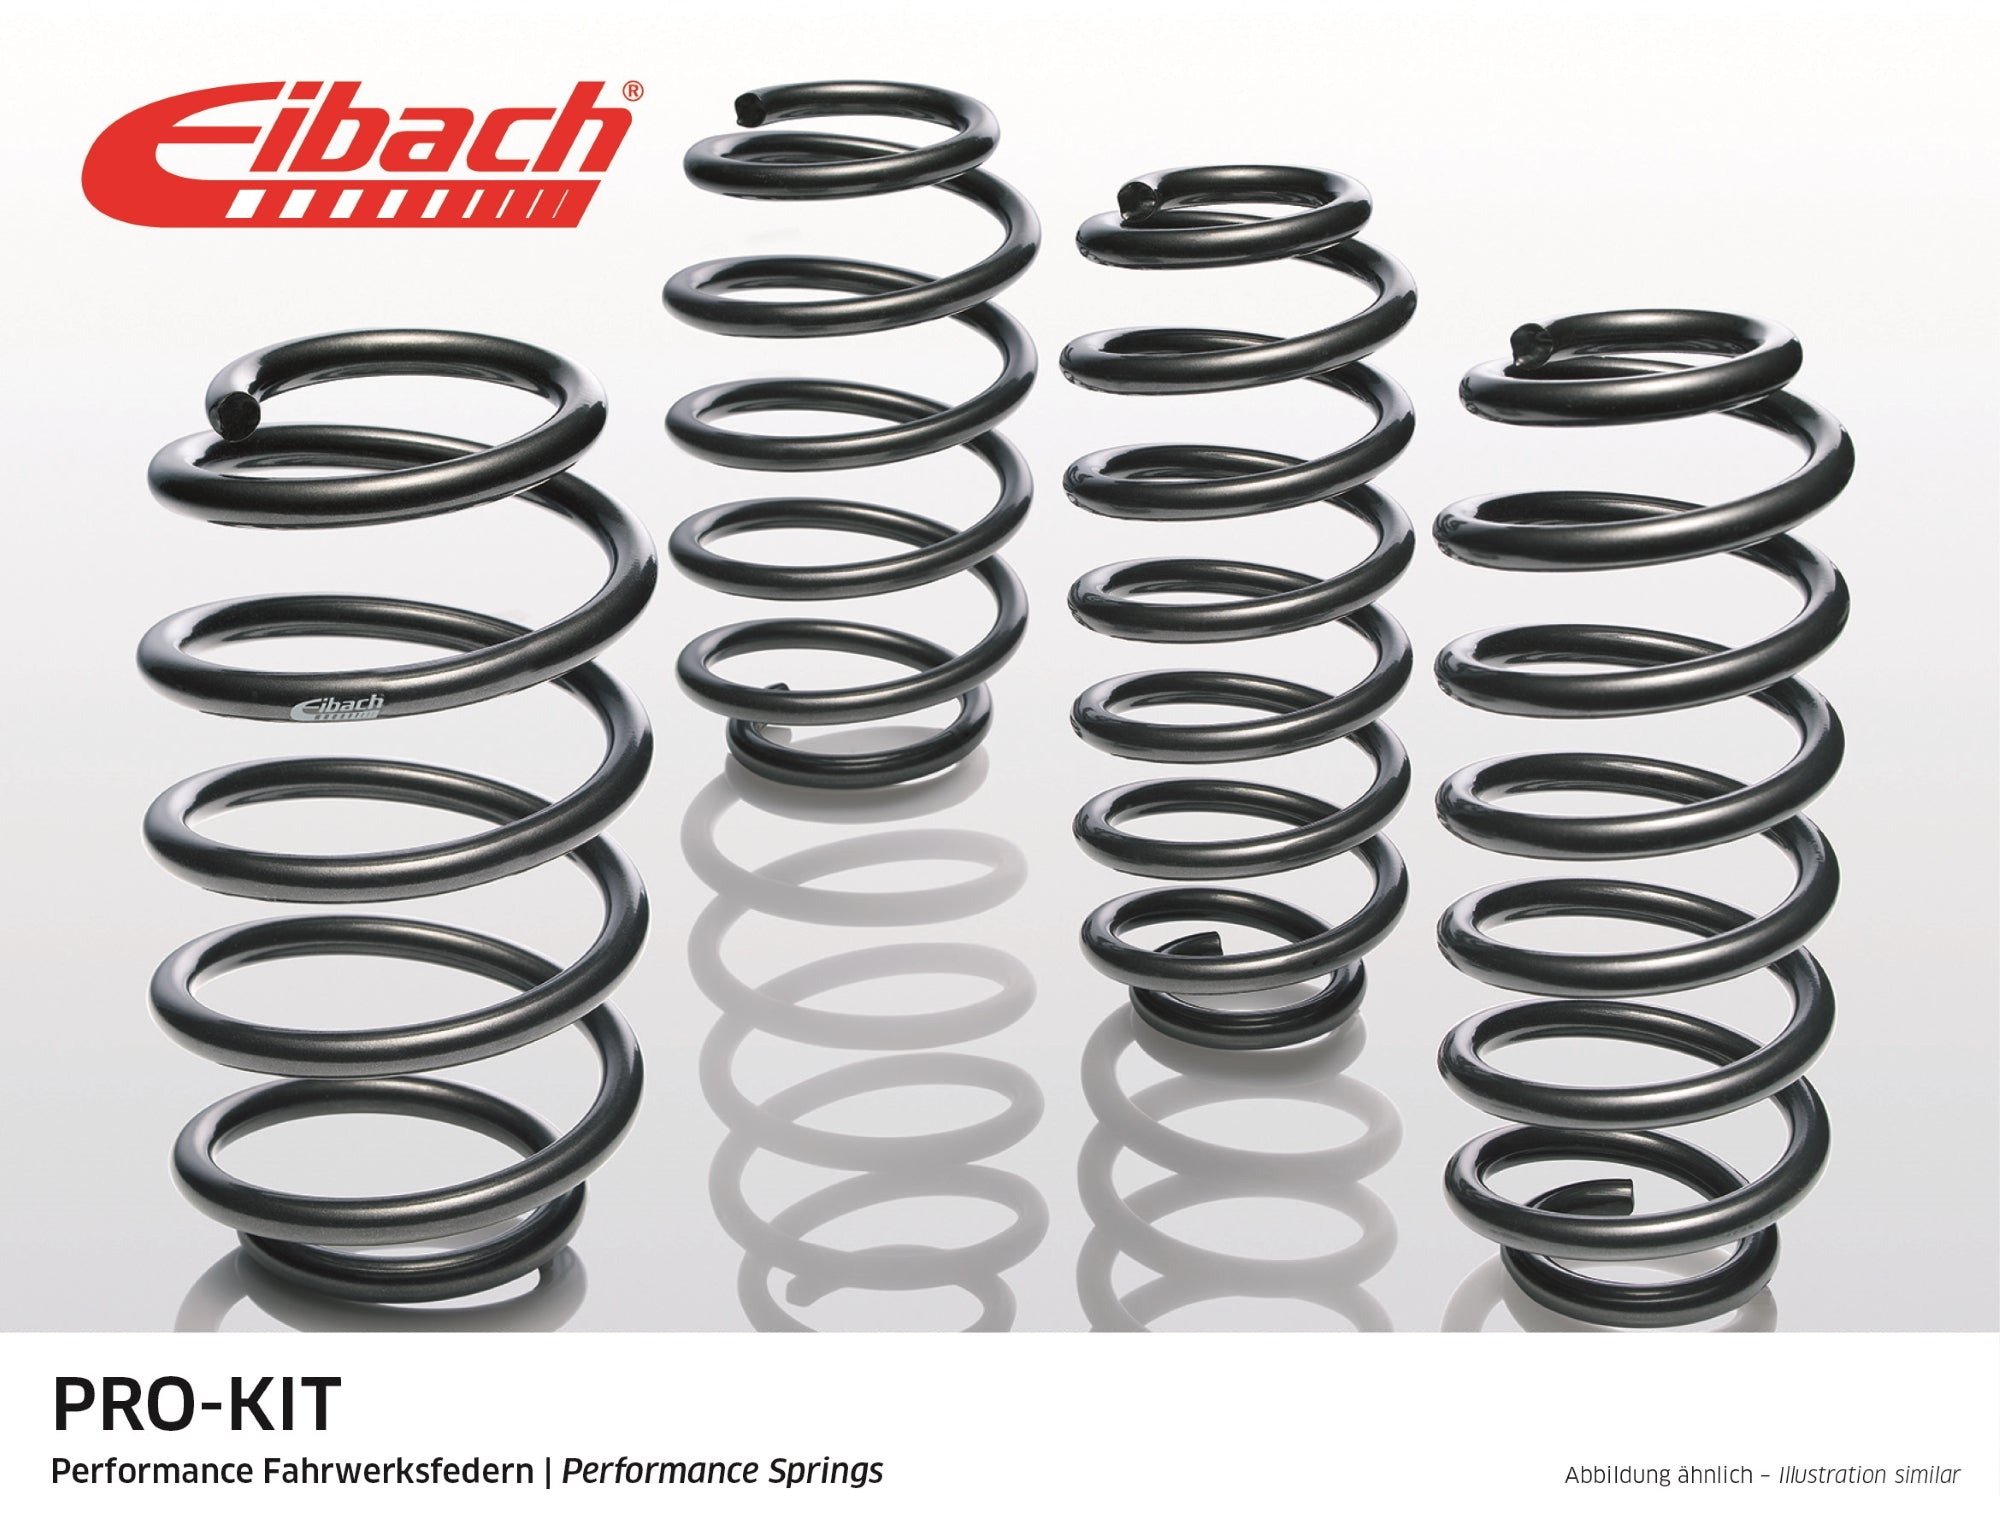 Eibach Suspension Pro-Kit (Performance Springs) Lowering Kit 911 2012-18 #E10-72-012-02-22